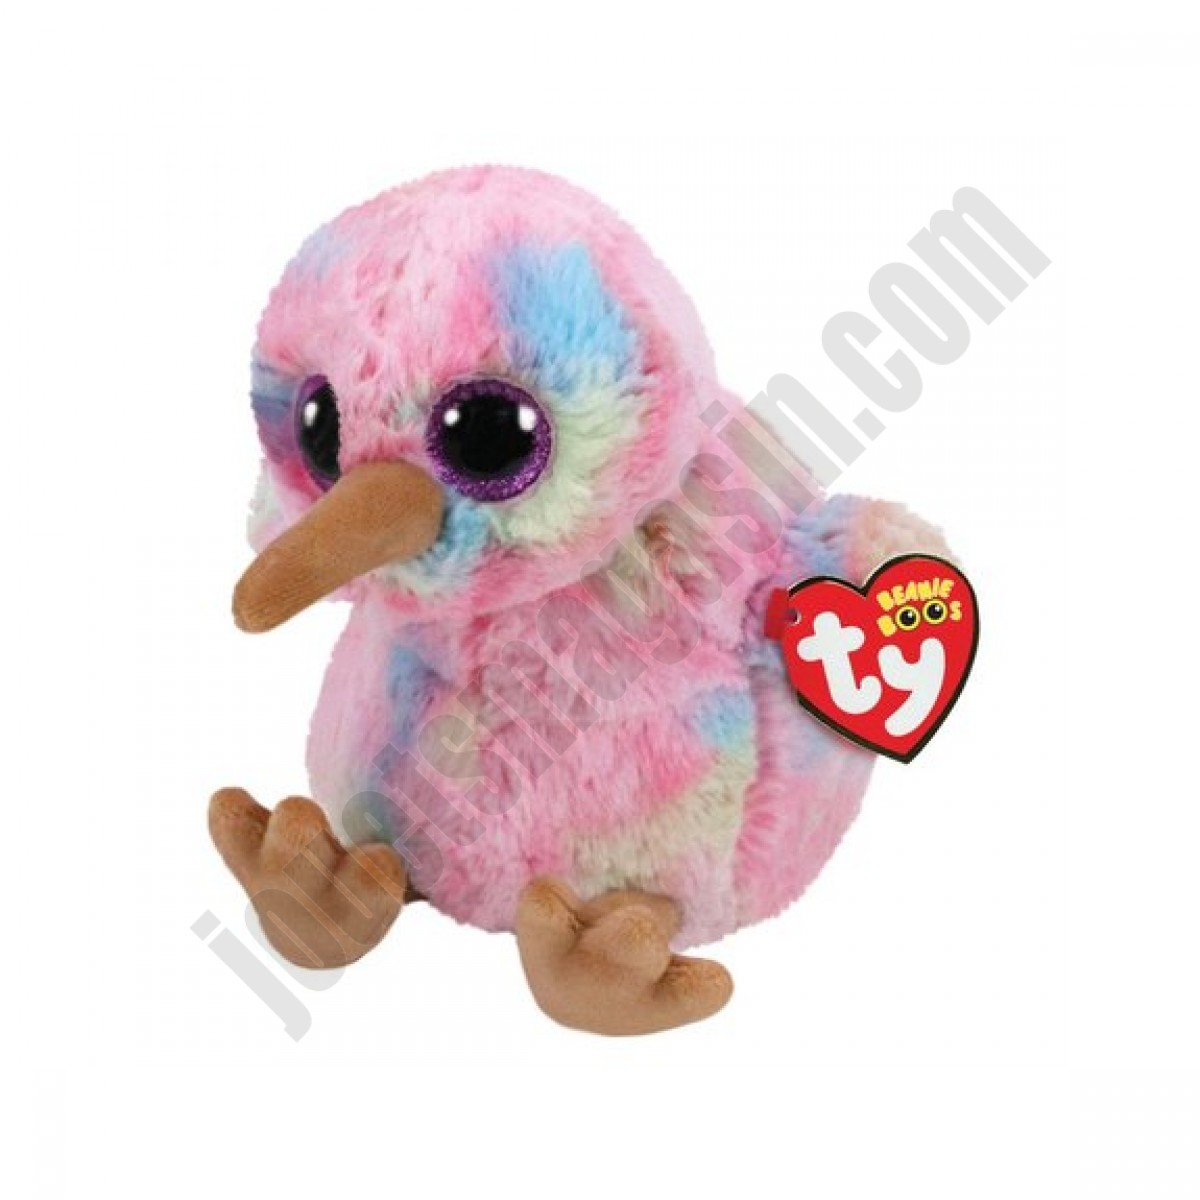 Beanie Boo's - Peluche Kiwi l'oiseau de 23 cm ◆◆◆ Nouveau - Beanie Boo's - Peluche Kiwi l'oiseau de 23 cm ◆◆◆ Nouveau